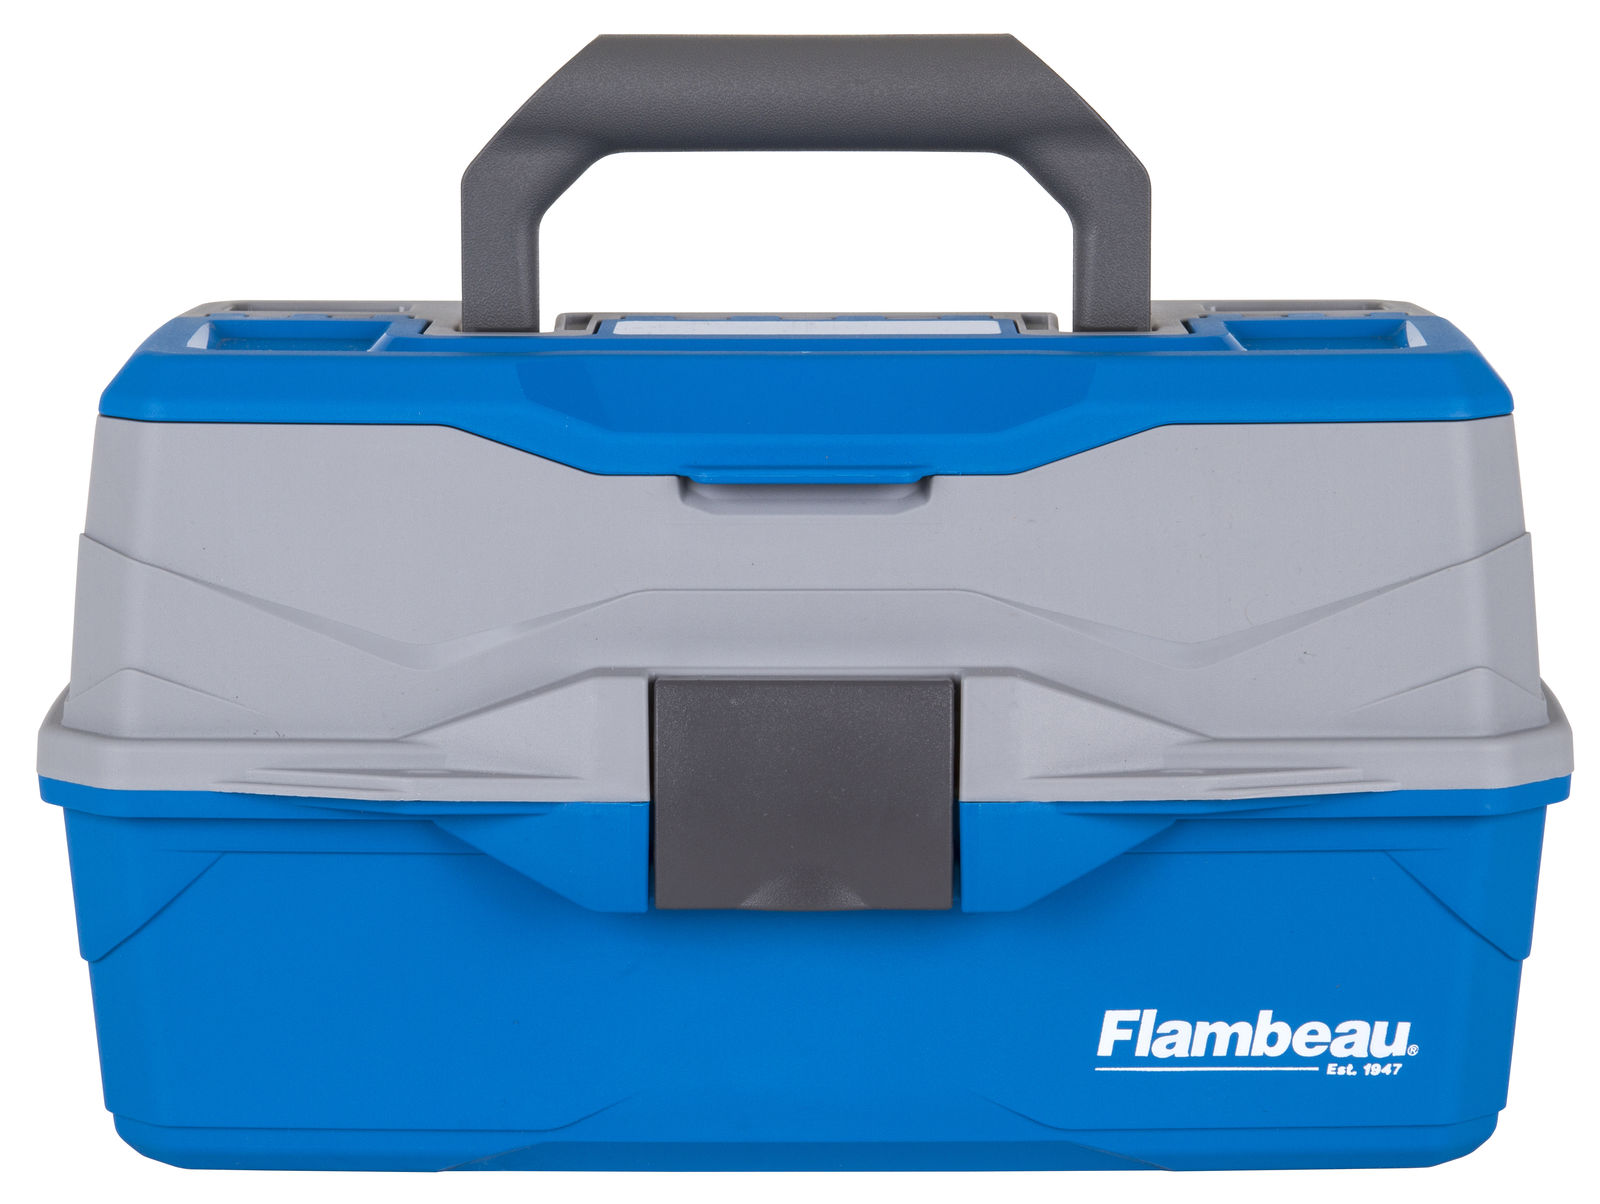 Flambeau Classic Viskoffer - Classic 2-Tray Blue